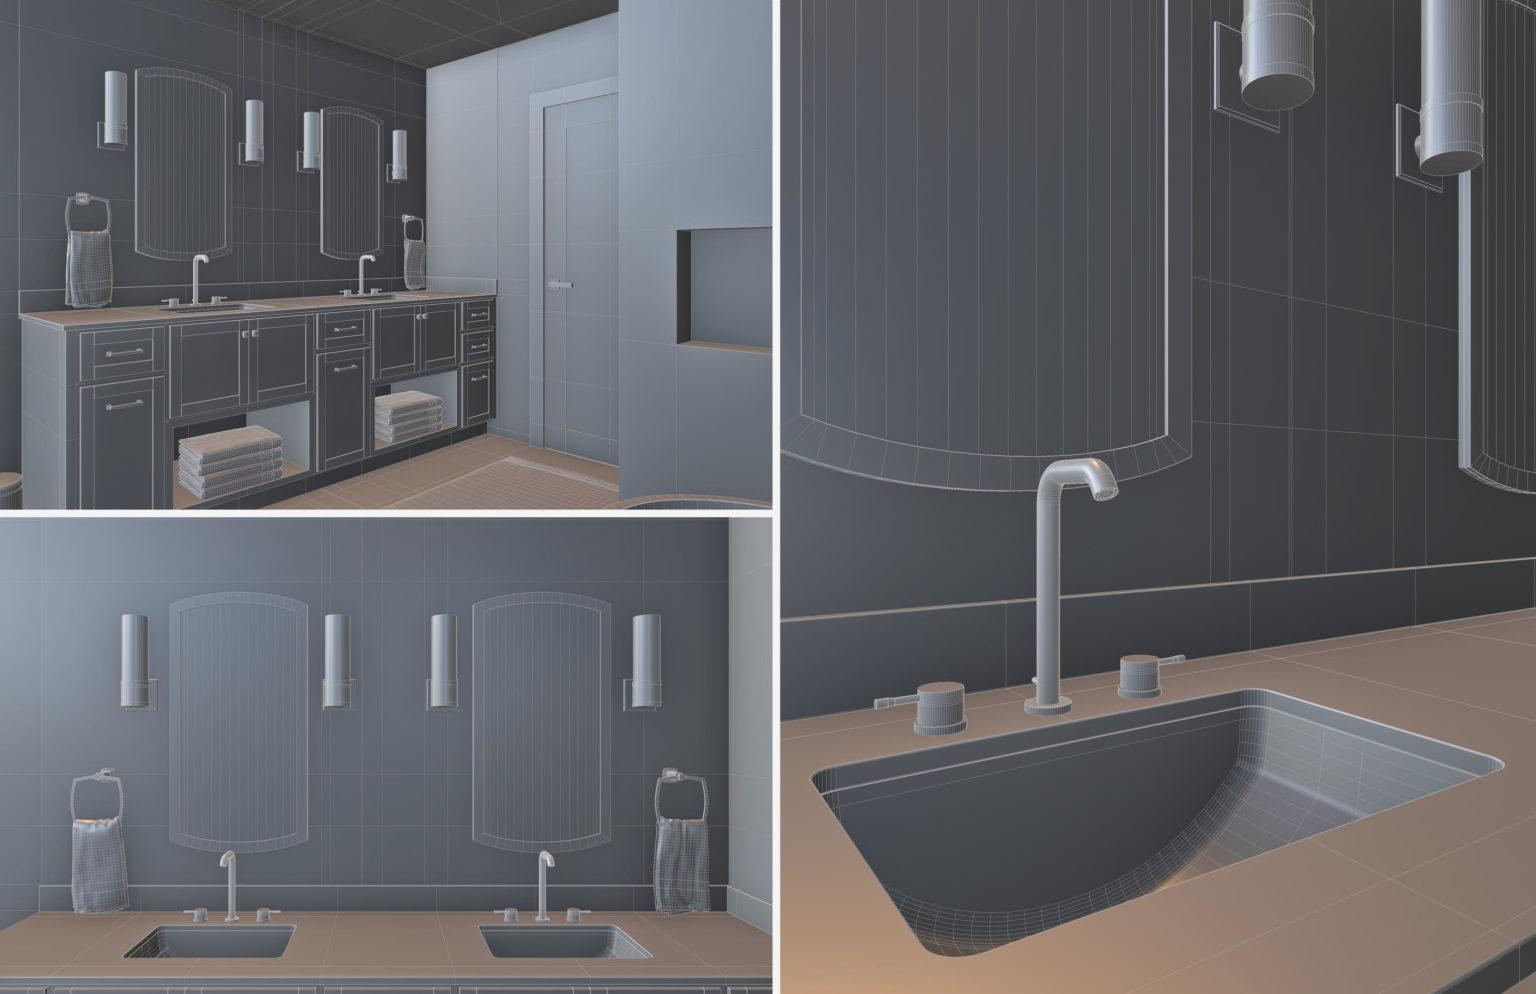 Michal Dziewiatkowski, Bathroom Space - Interior and Product Rendering - Wireframe2